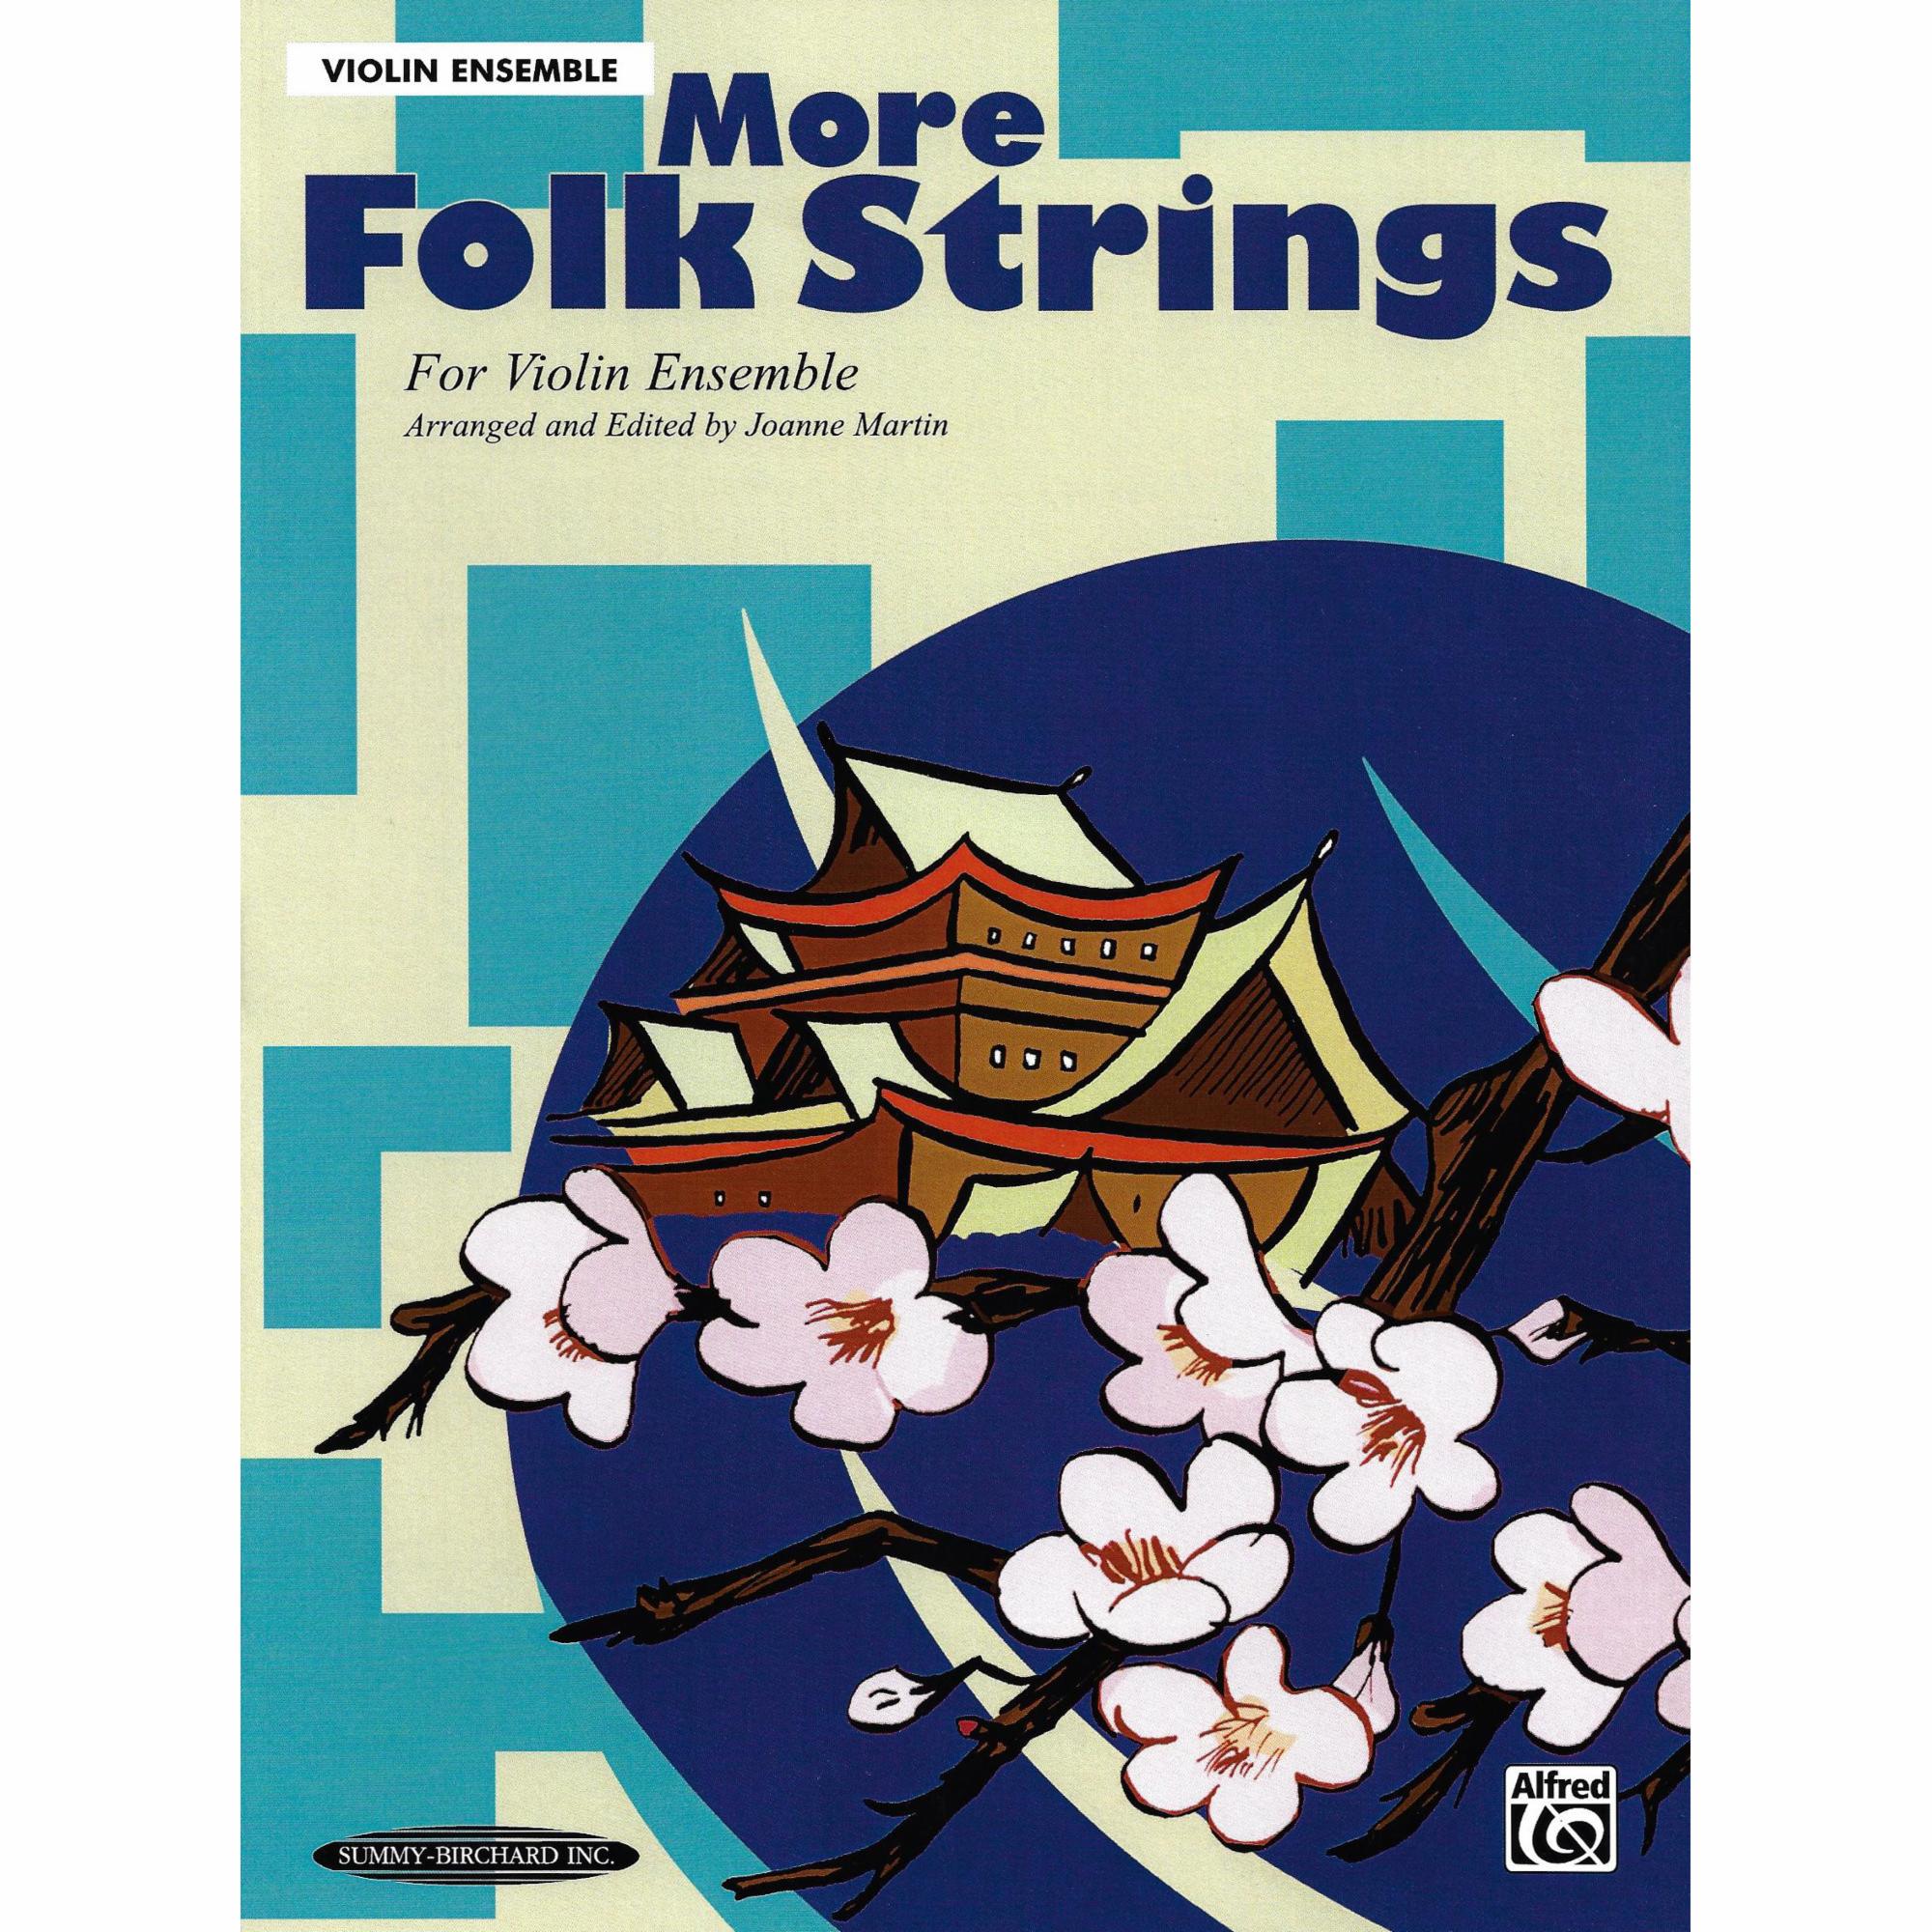 More Folk Strings for Violin, Viola, or Cello Ensemble